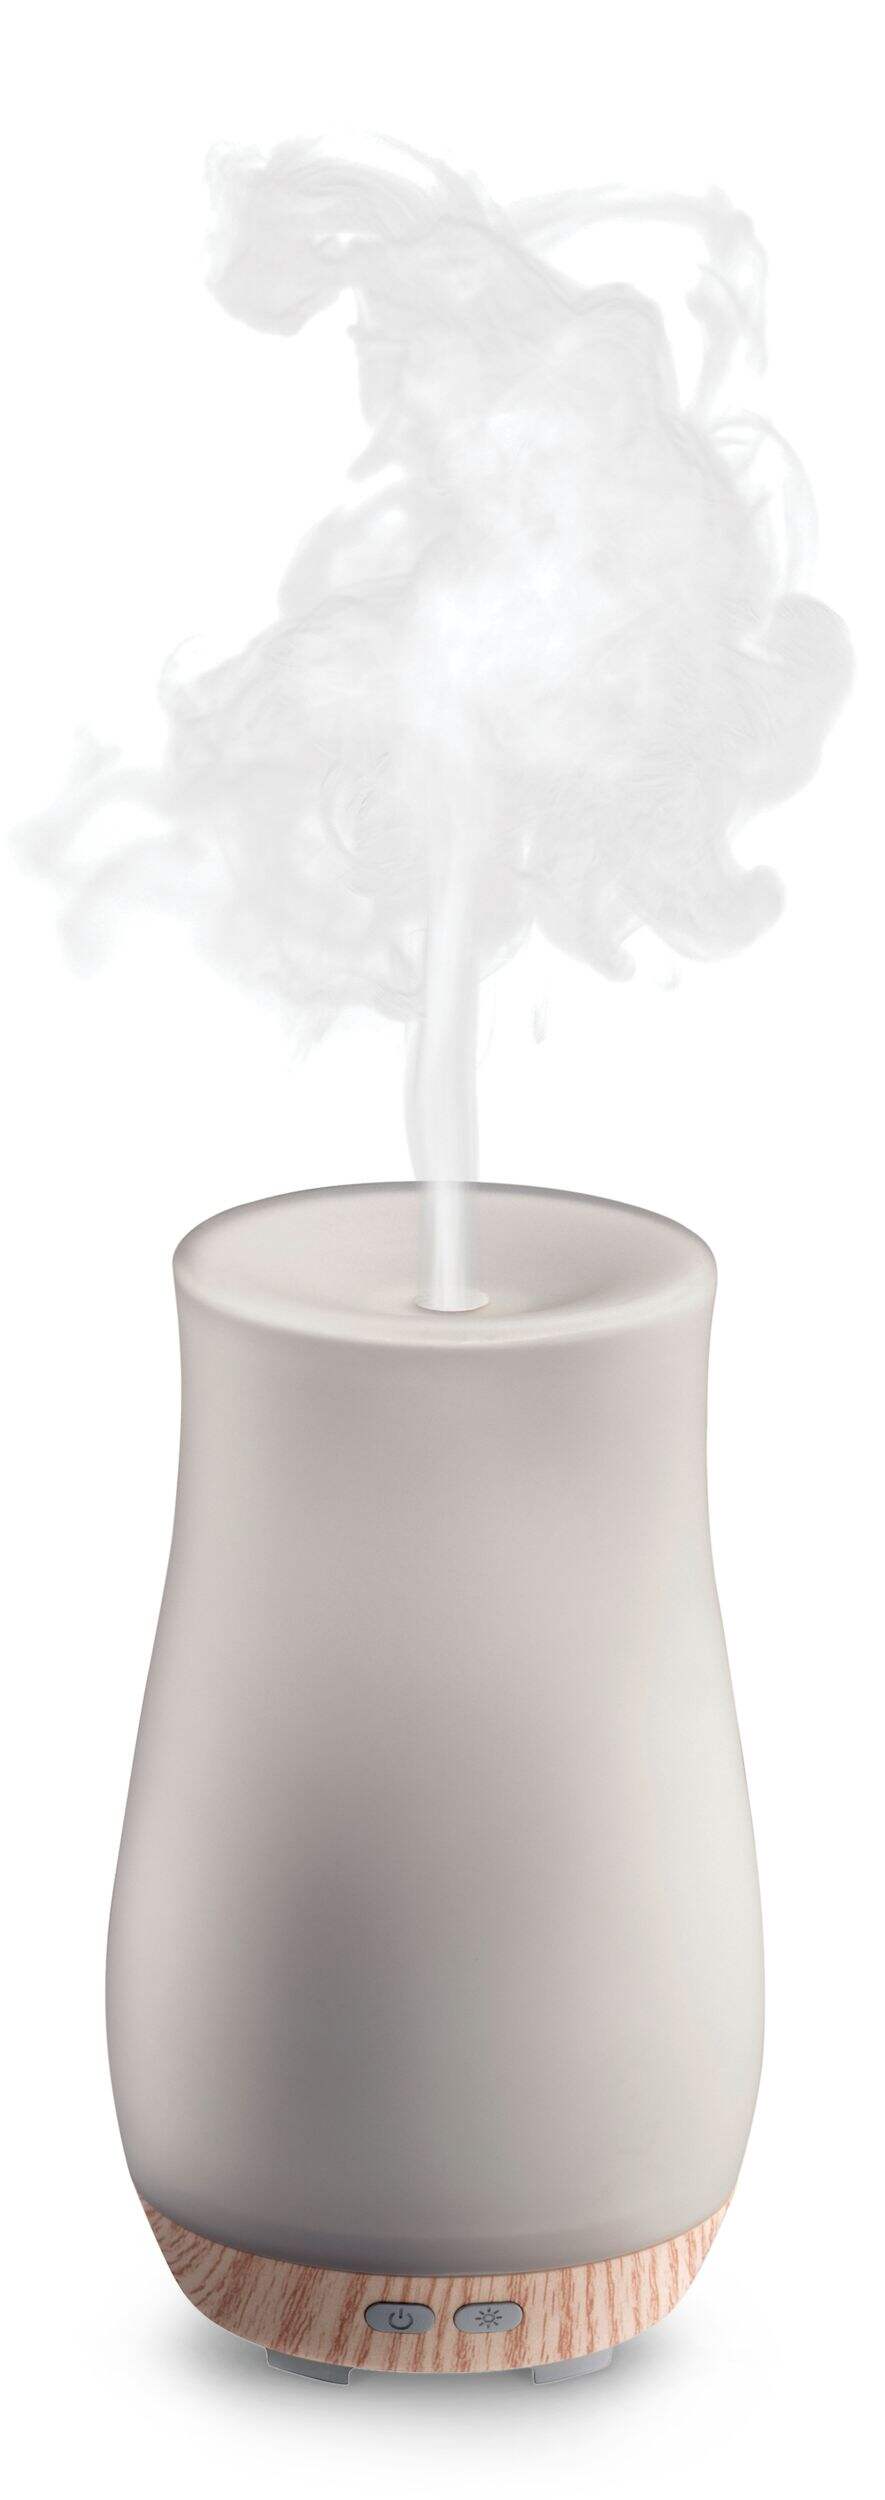 HoMedics Ultrasonic Glass Aromatherapy Diffuser Set with Light, White ...